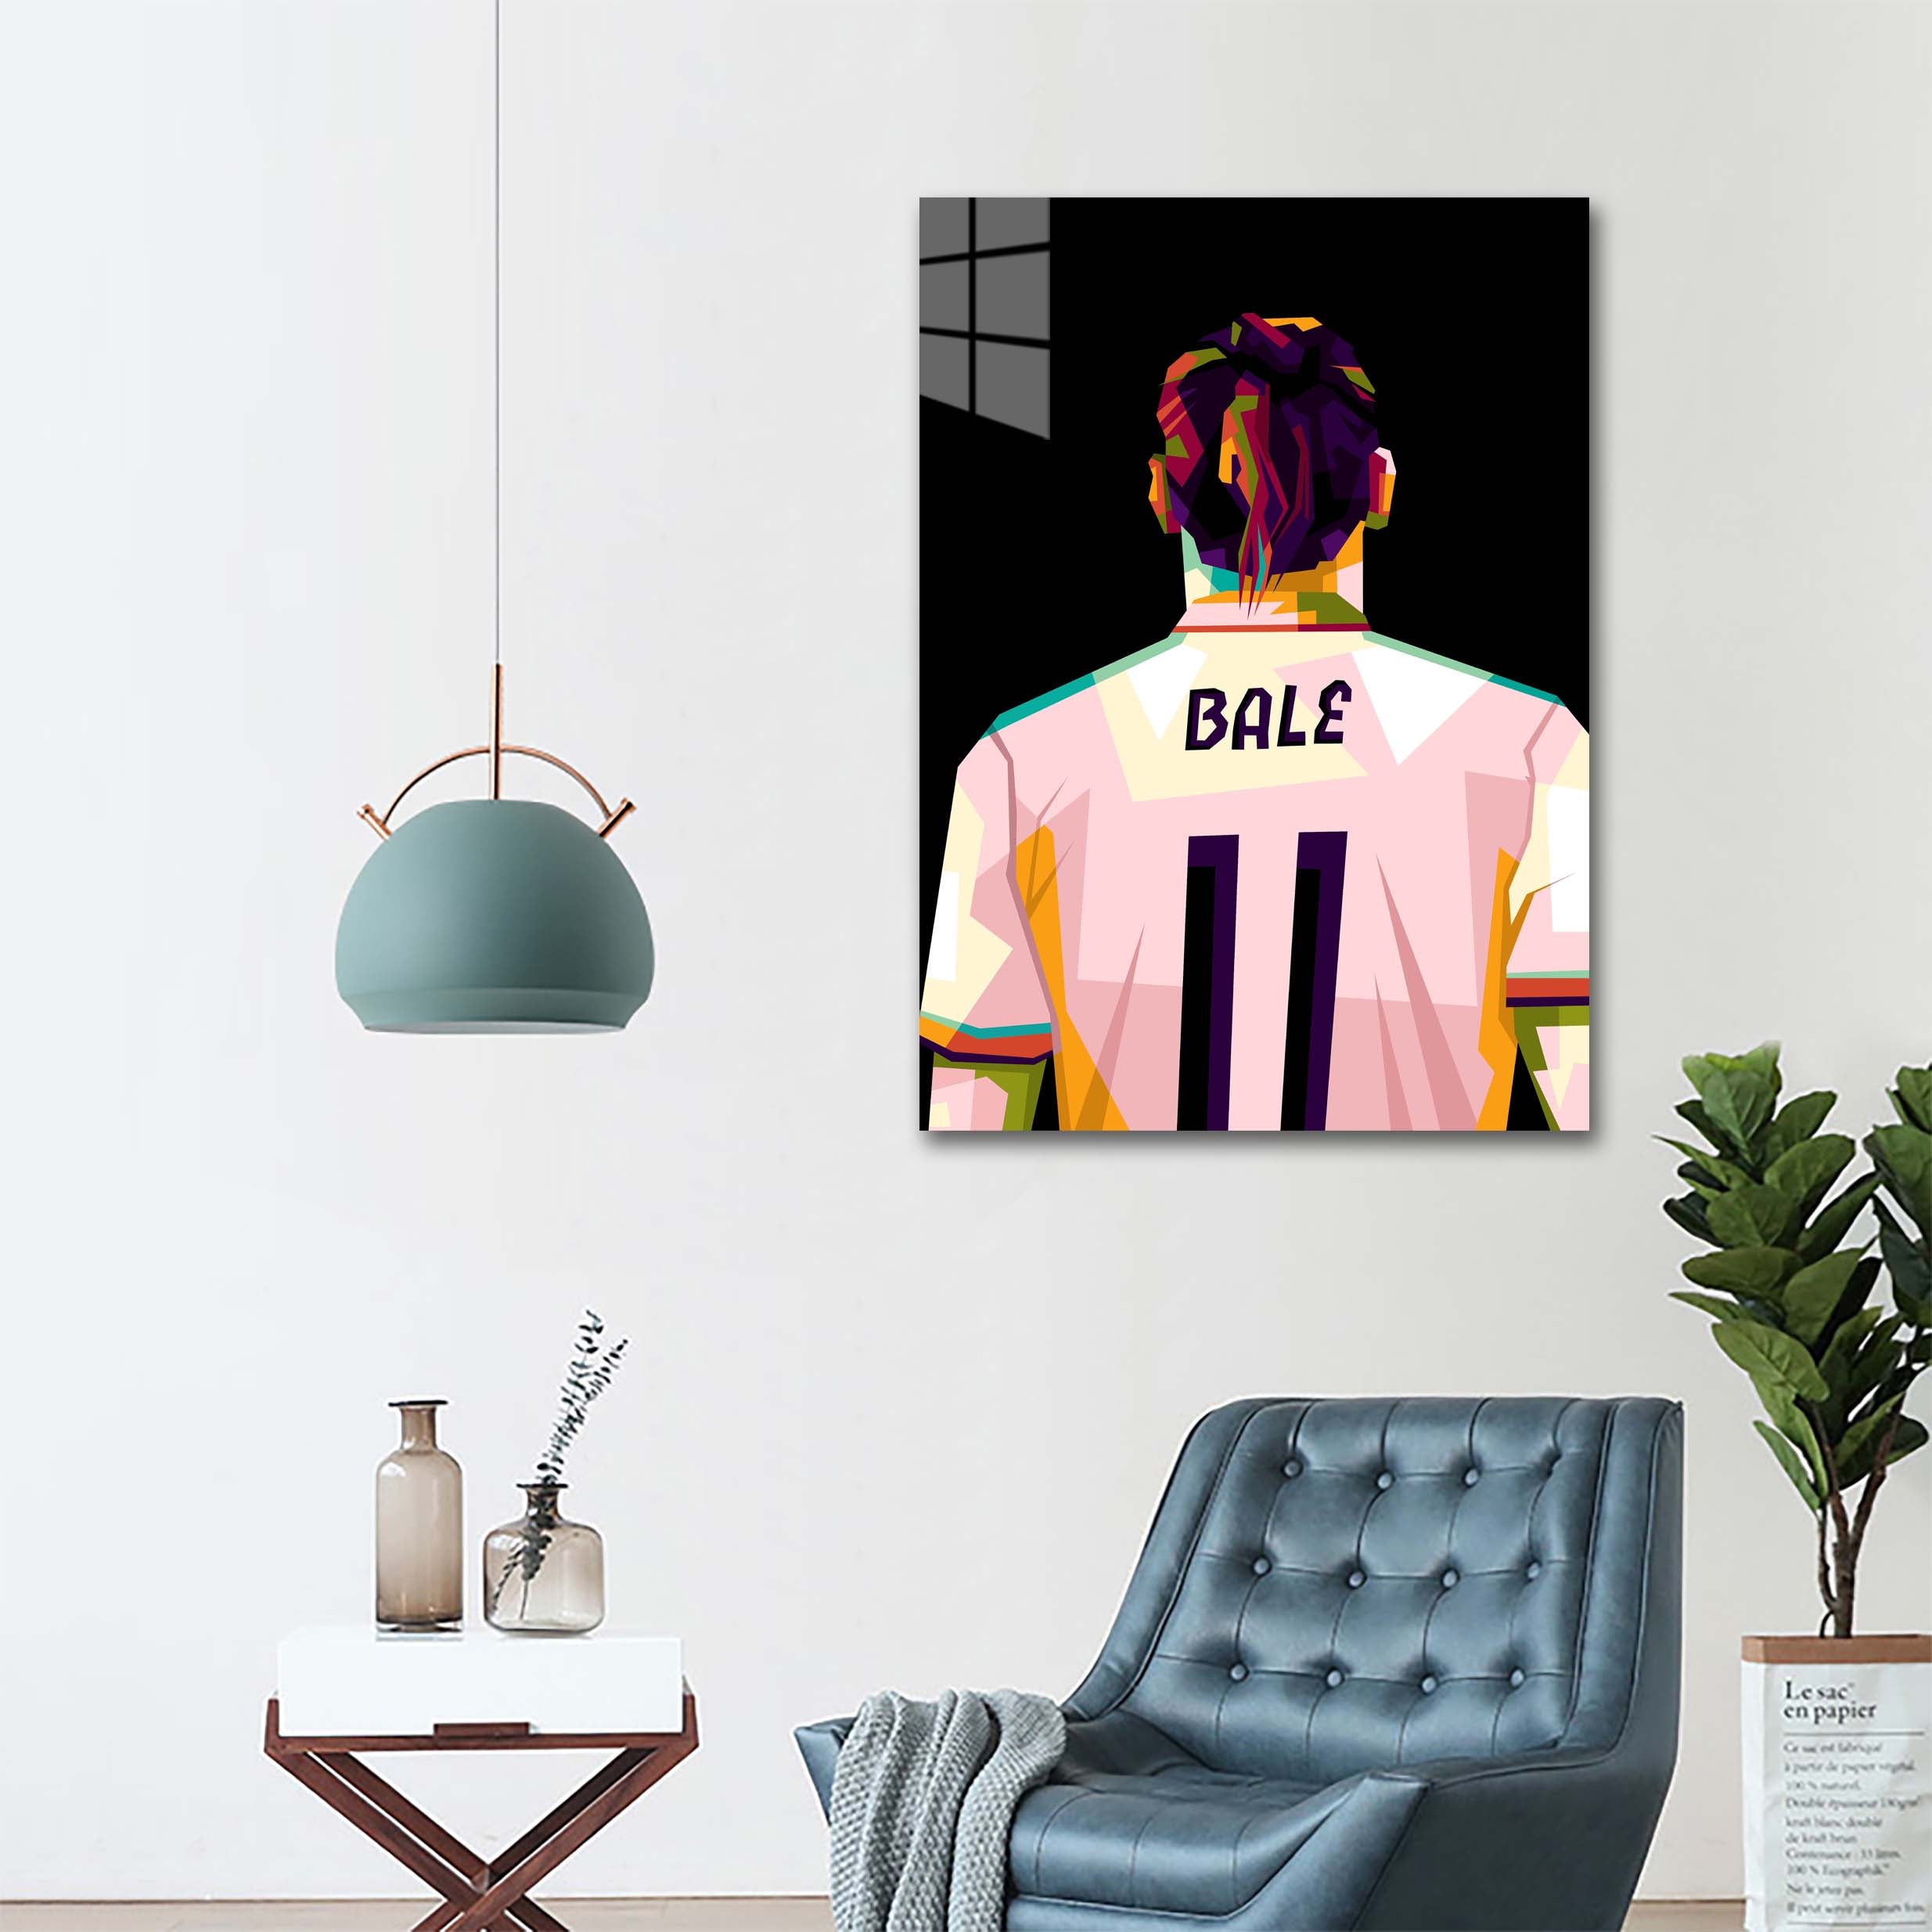 Gareth Bale in fantastic pop art-designed by @Amirudin kosong enam